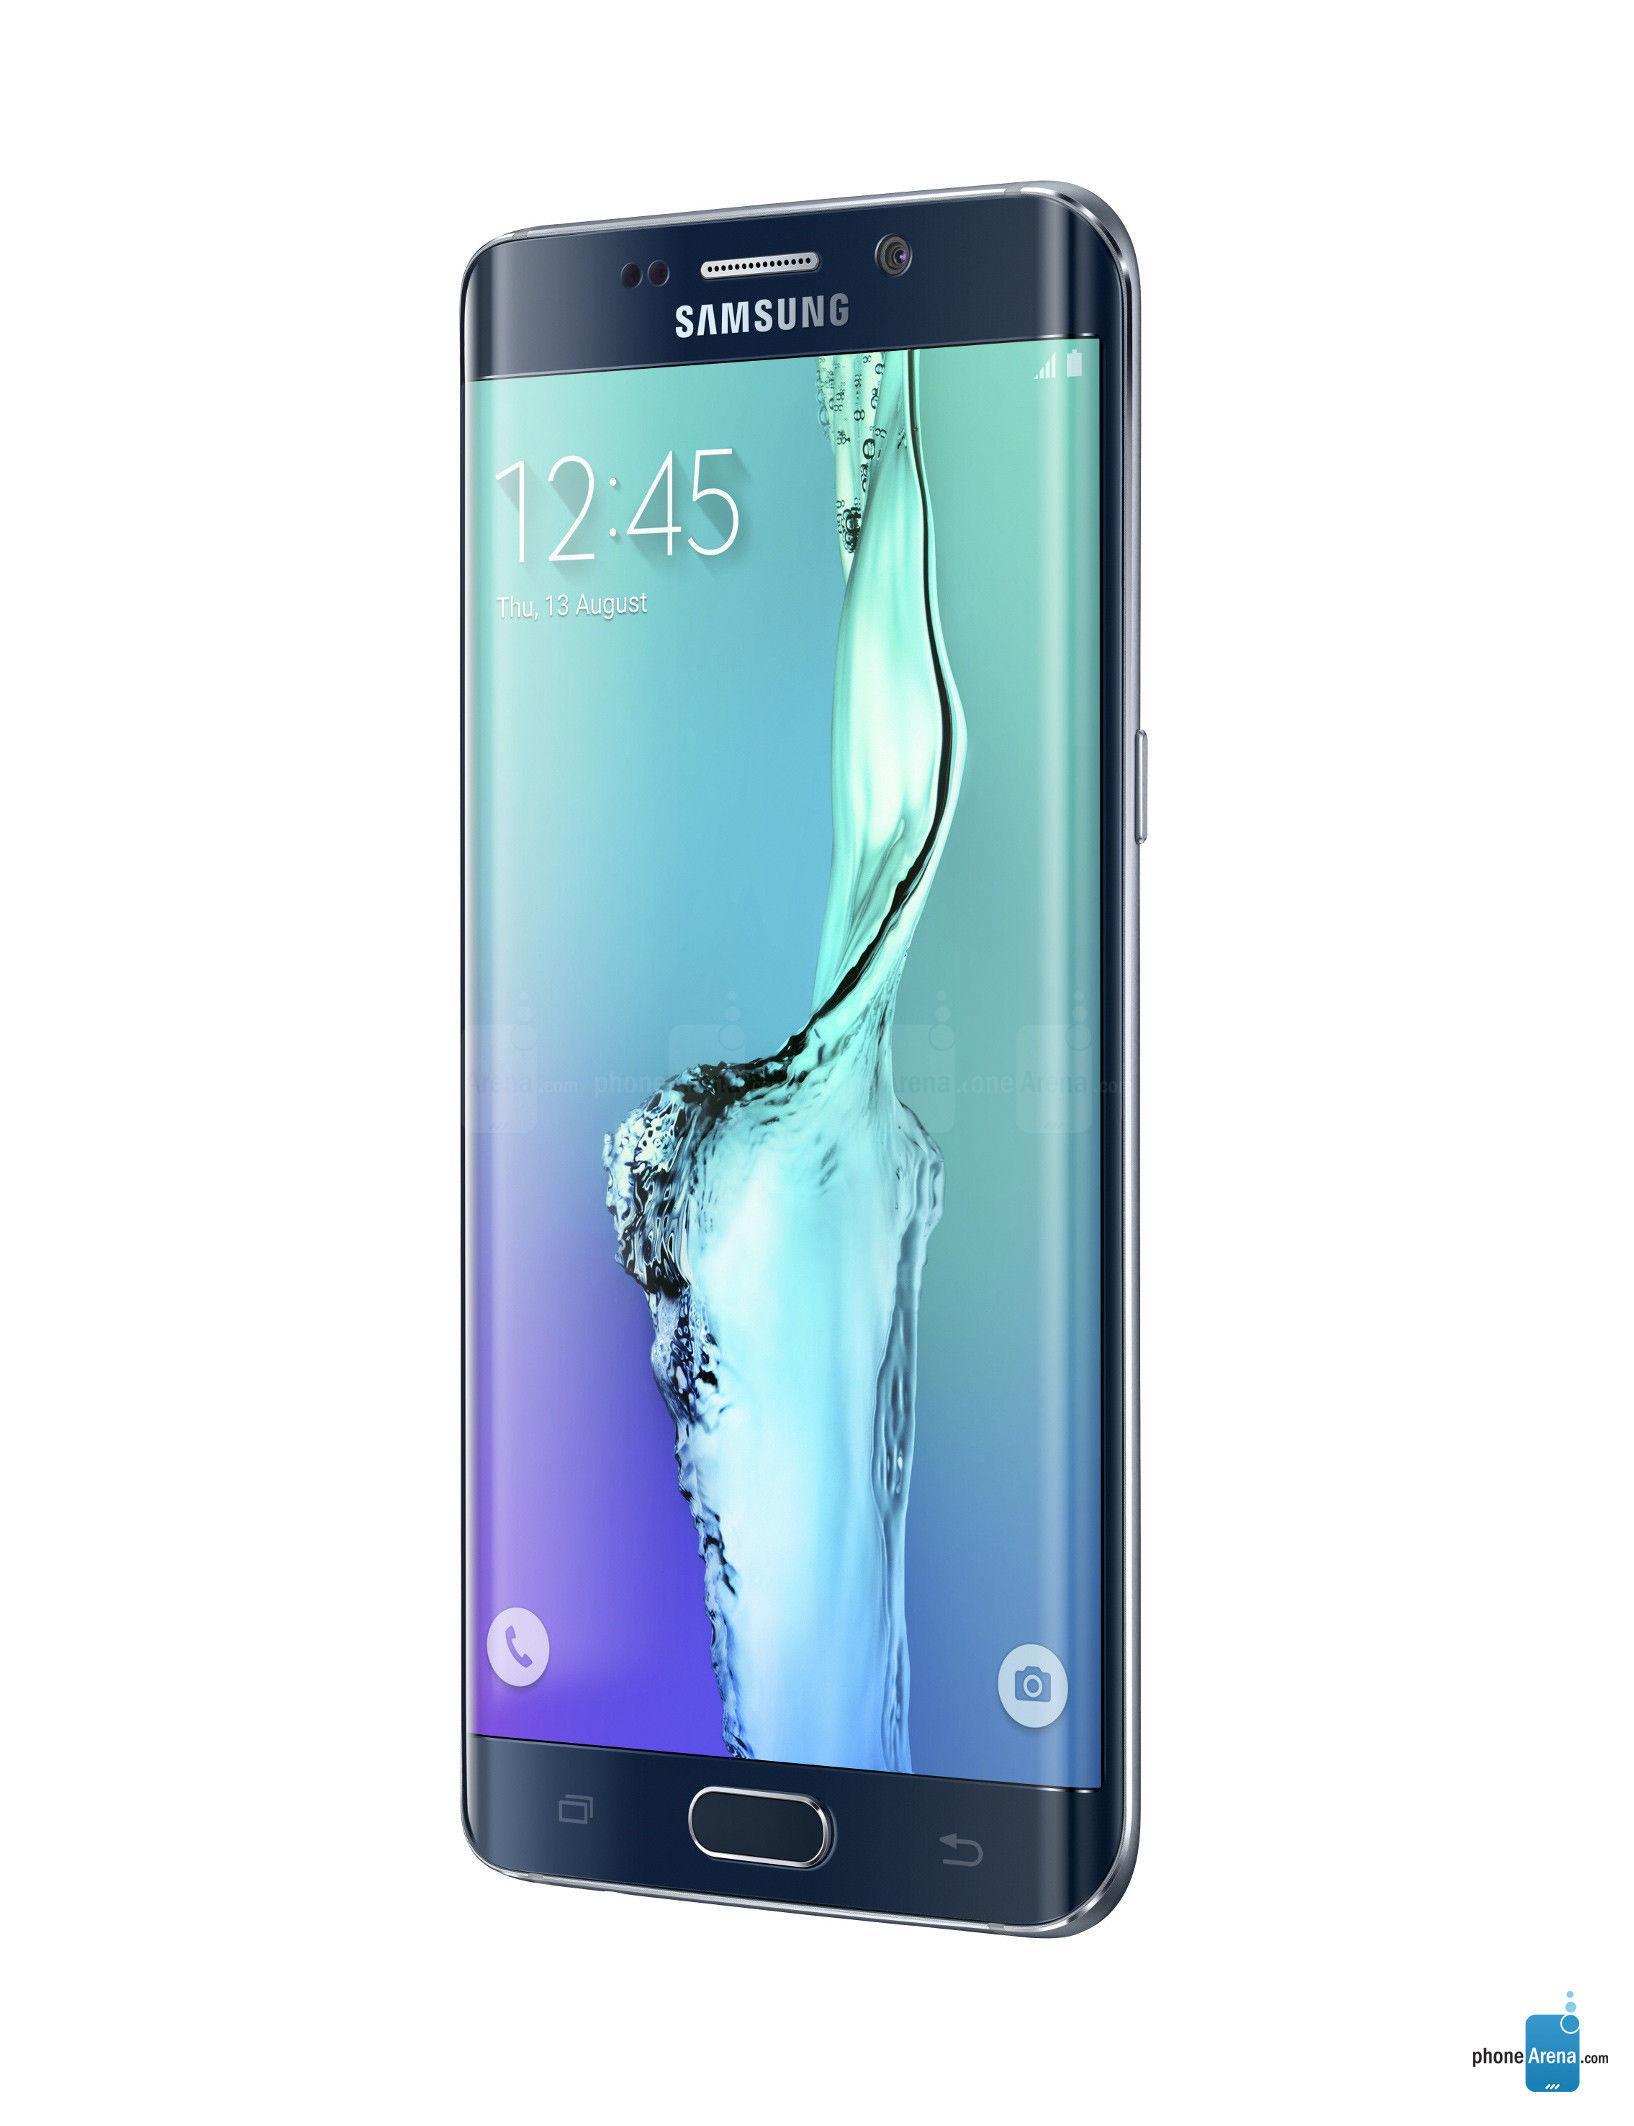 Image - Samsung Galaxy S6 edge+ 16 megapixels Camera. #samsung #galaxy #edge #plus - Post 561